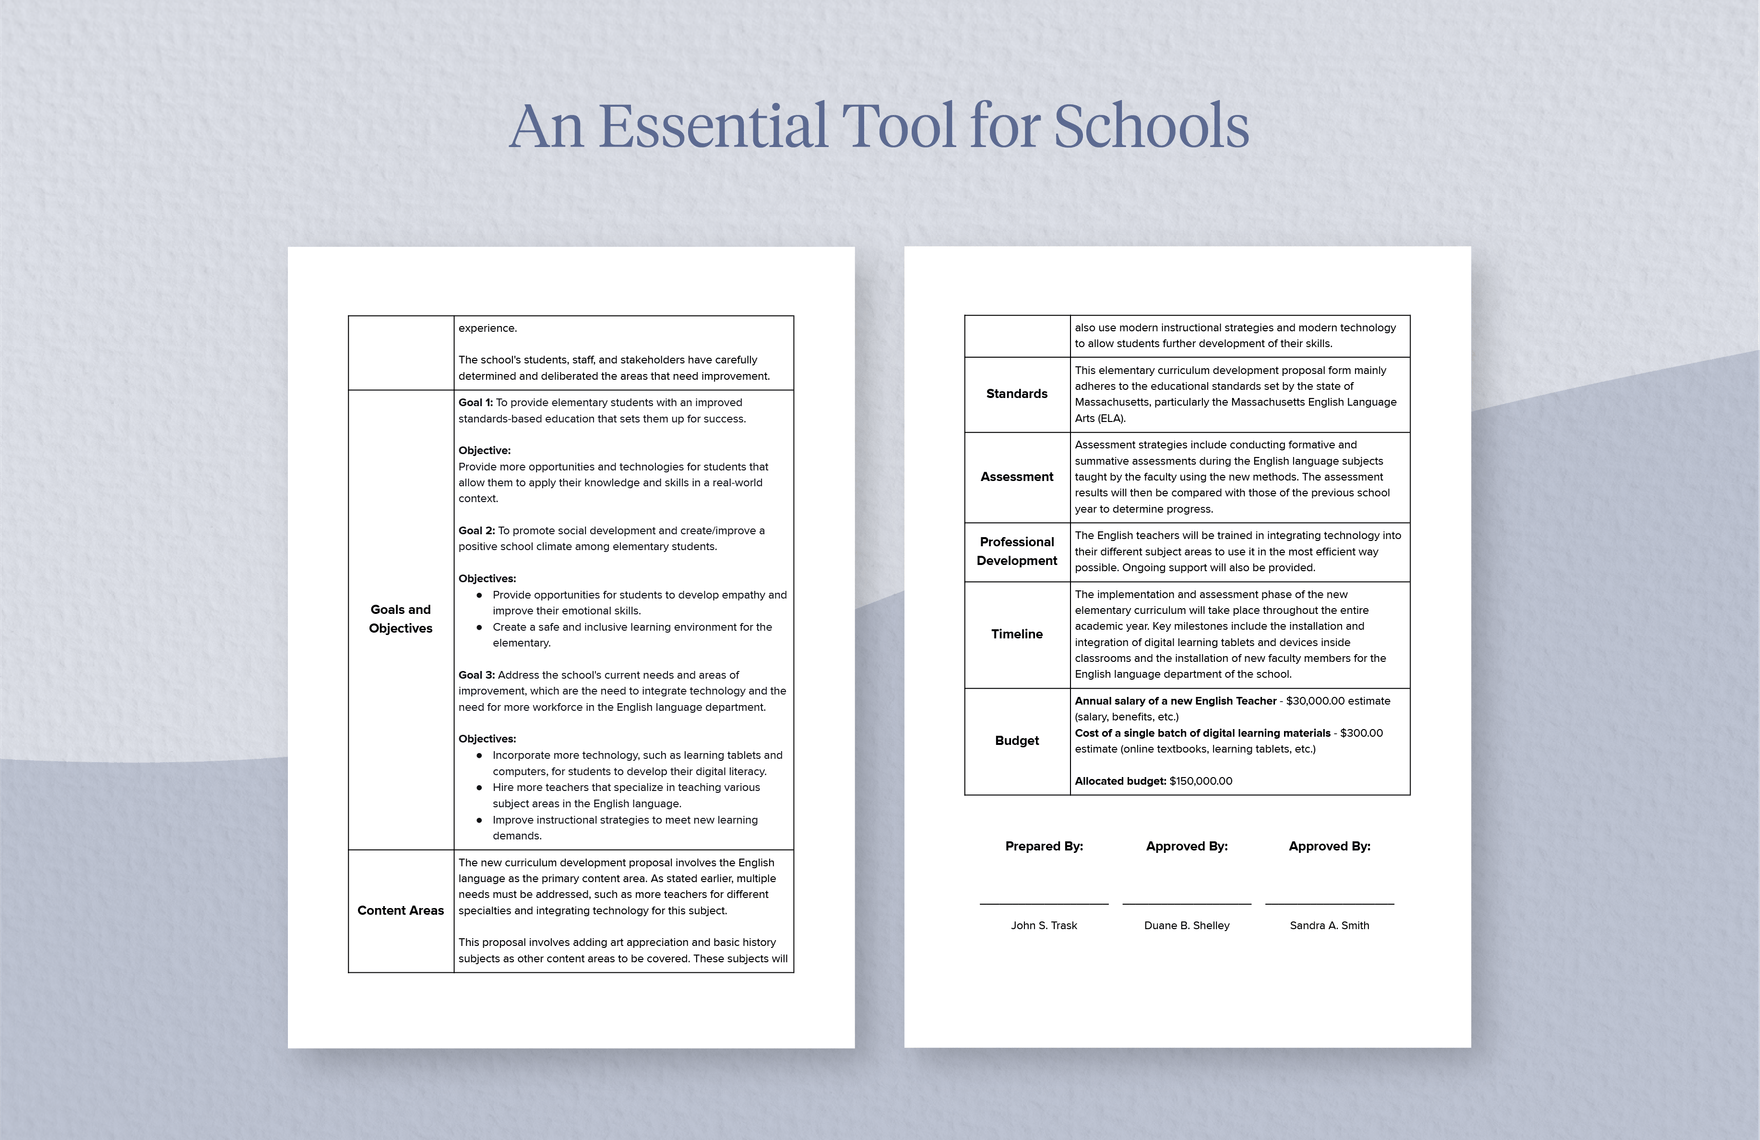 Elementary Curriculum Development Proposal Form